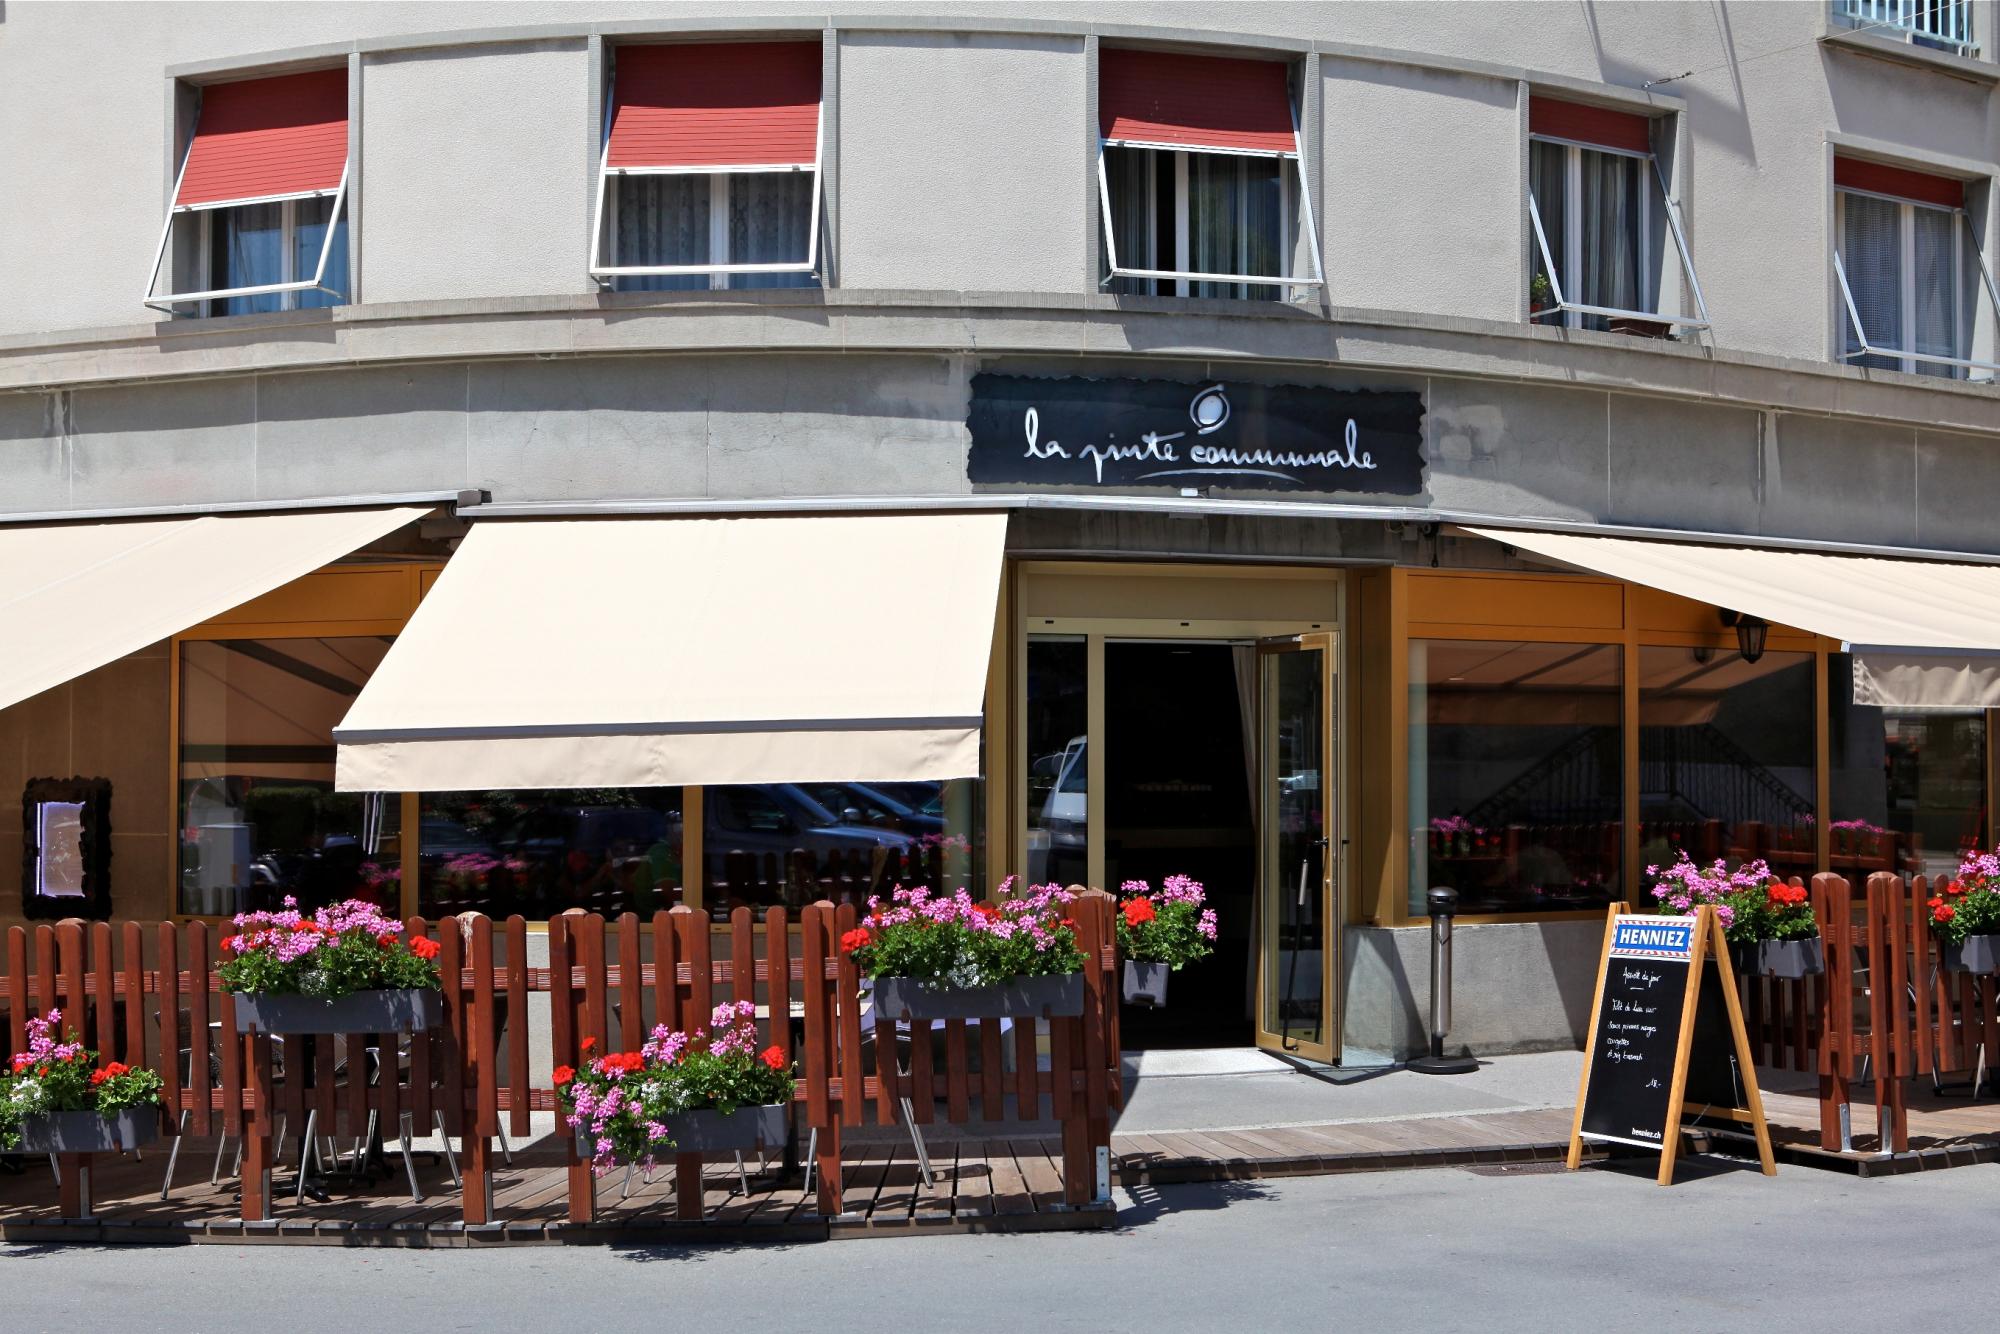 La Pinte Communale restaurant - summer - Aigle